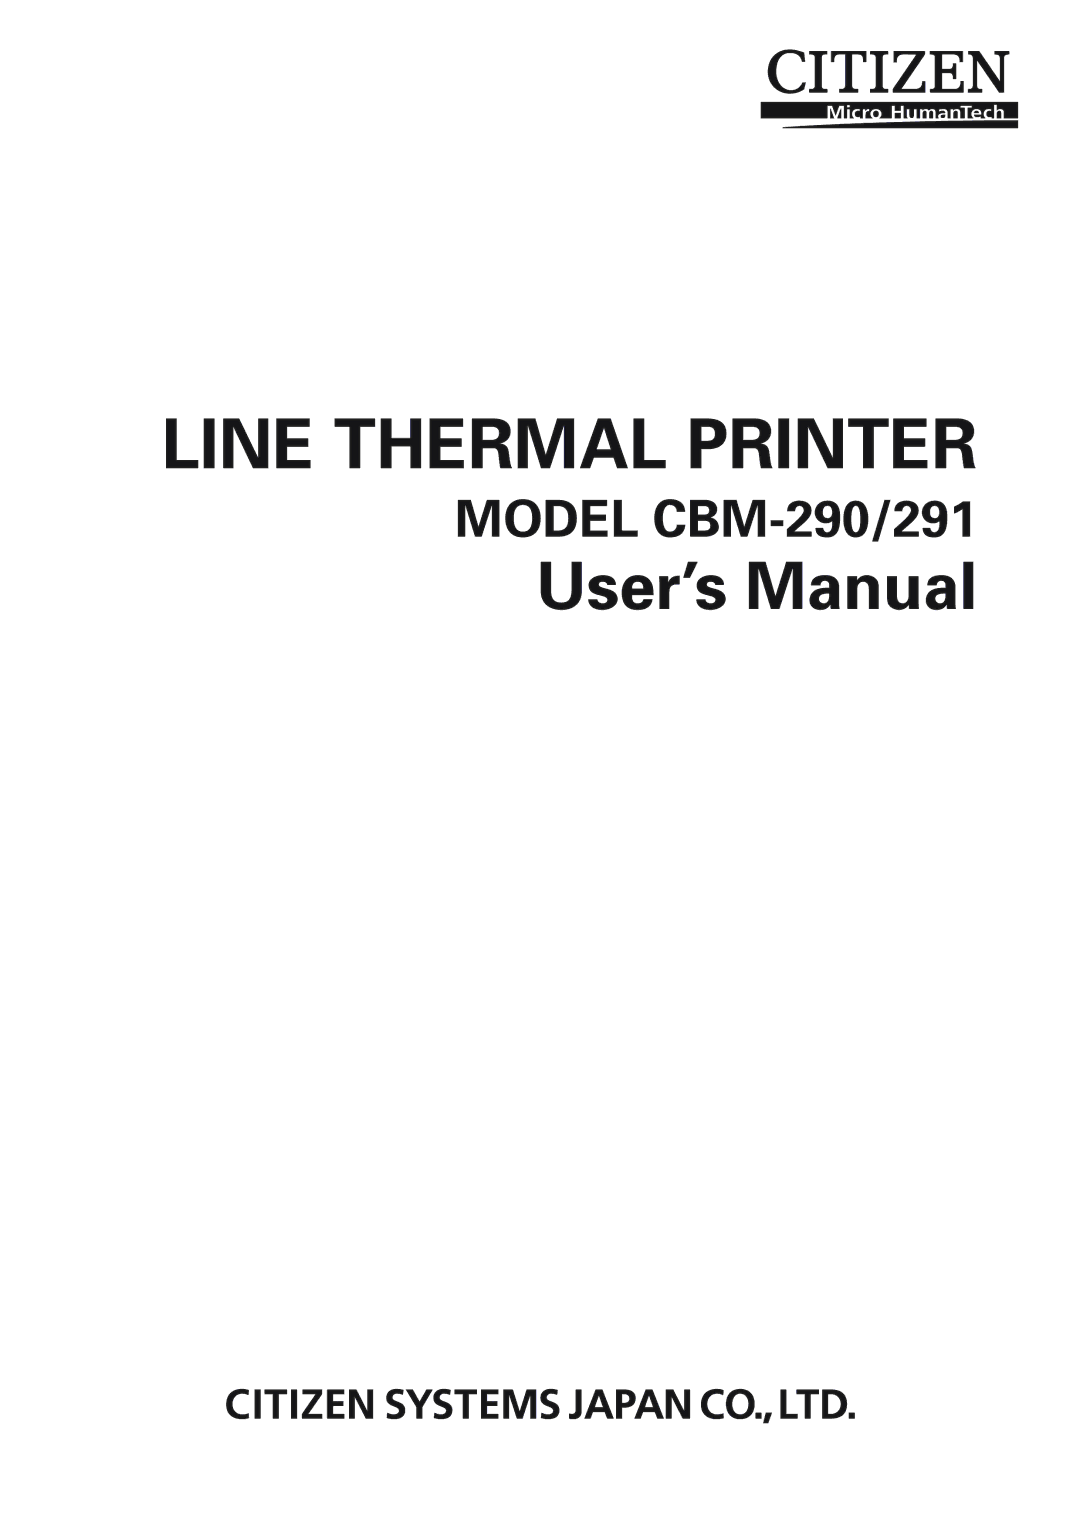 Citizen Systems 291, CBM-290 user manual Line Thermal Printer 